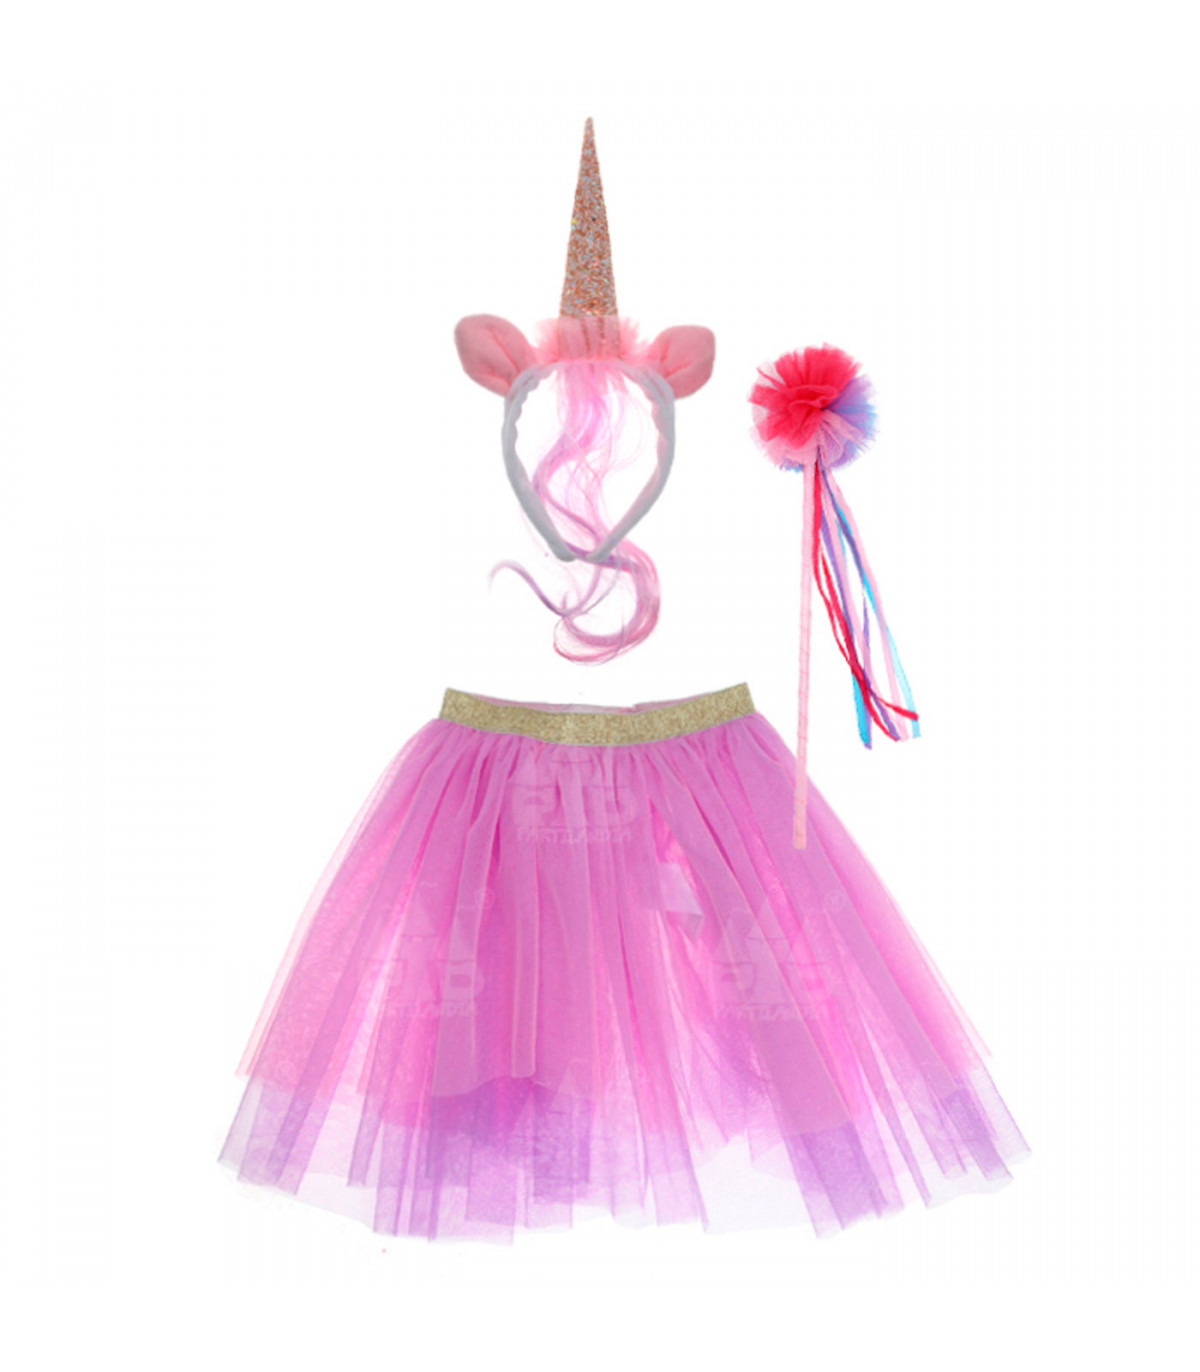 Disfraz de unicornio disfraz de Halloween para niñas disfraz de